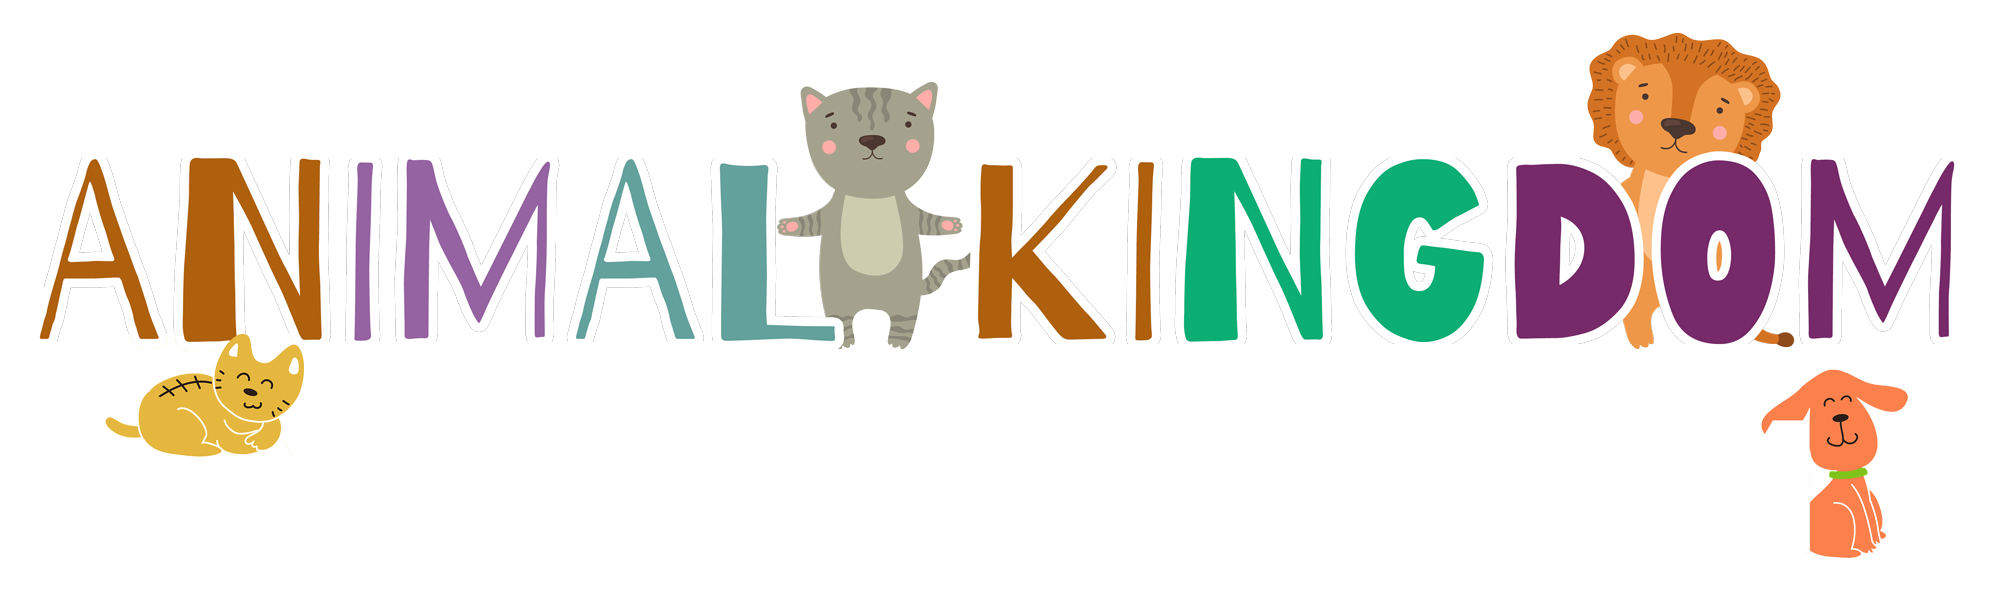 Animal Kingdom Rescue Forum